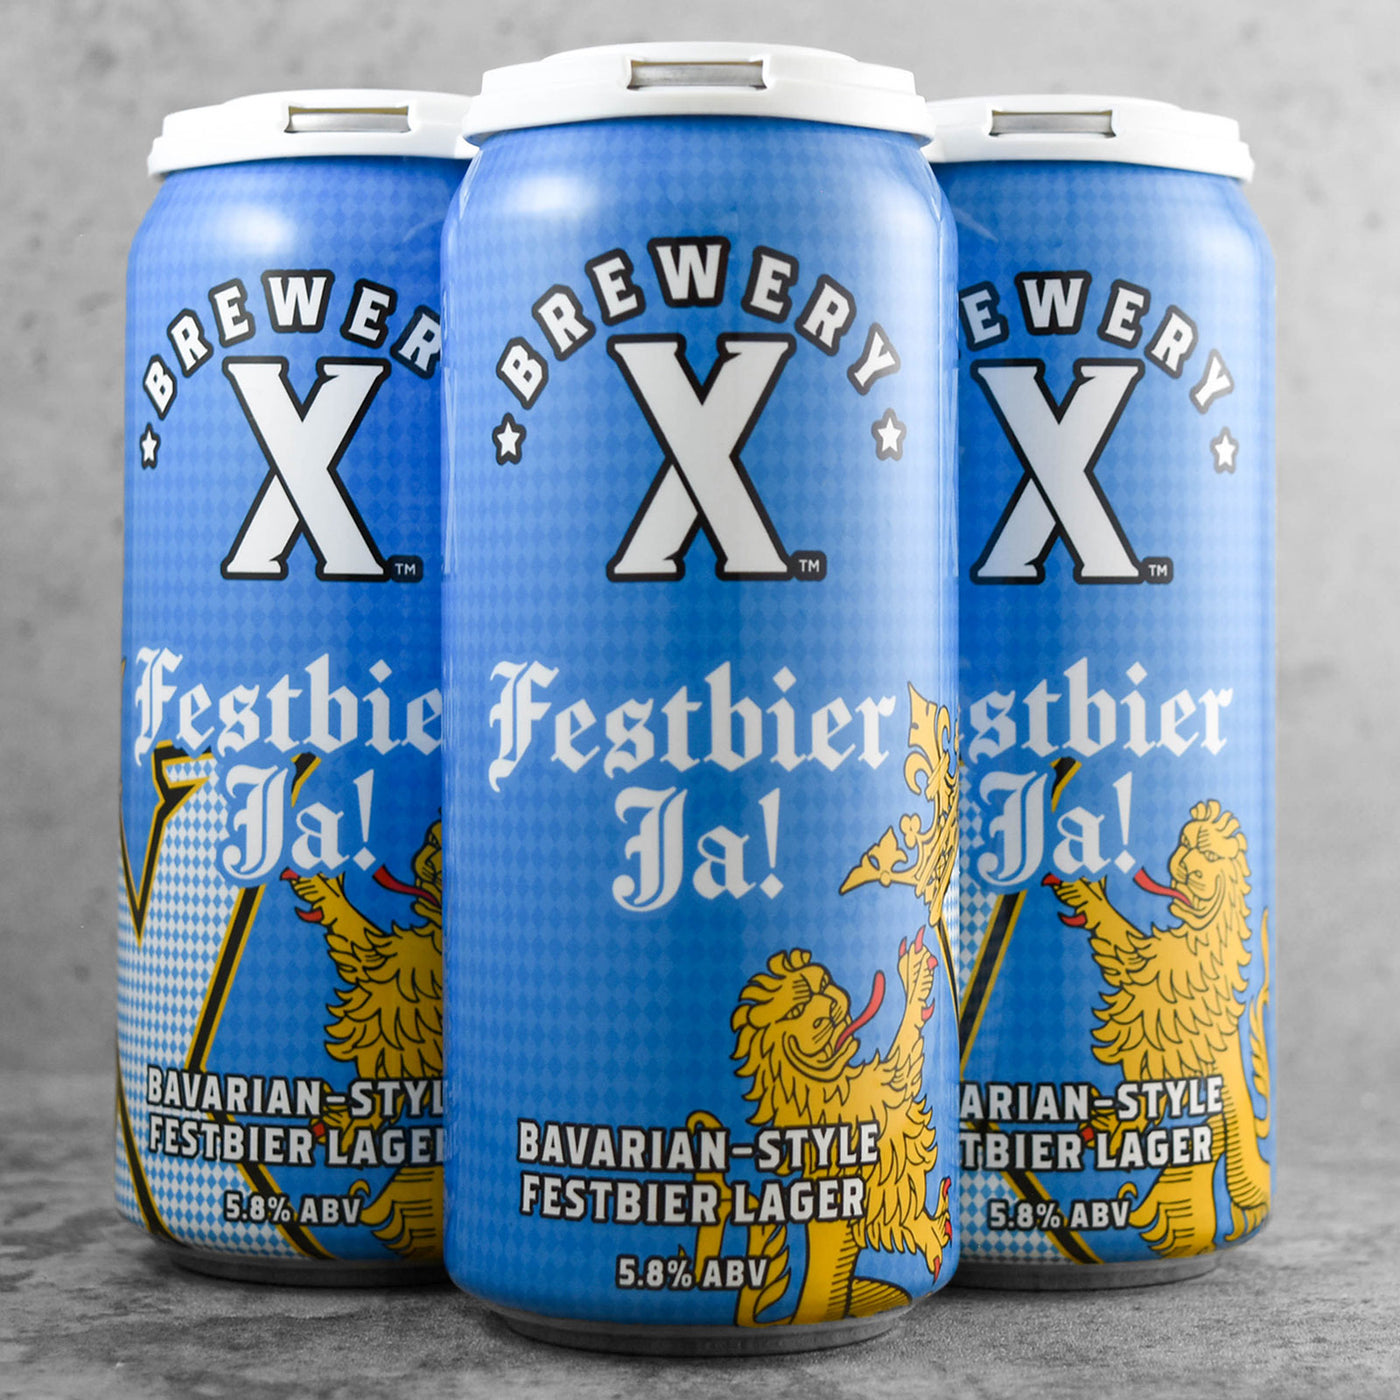 Brewery X Festbier Ja!